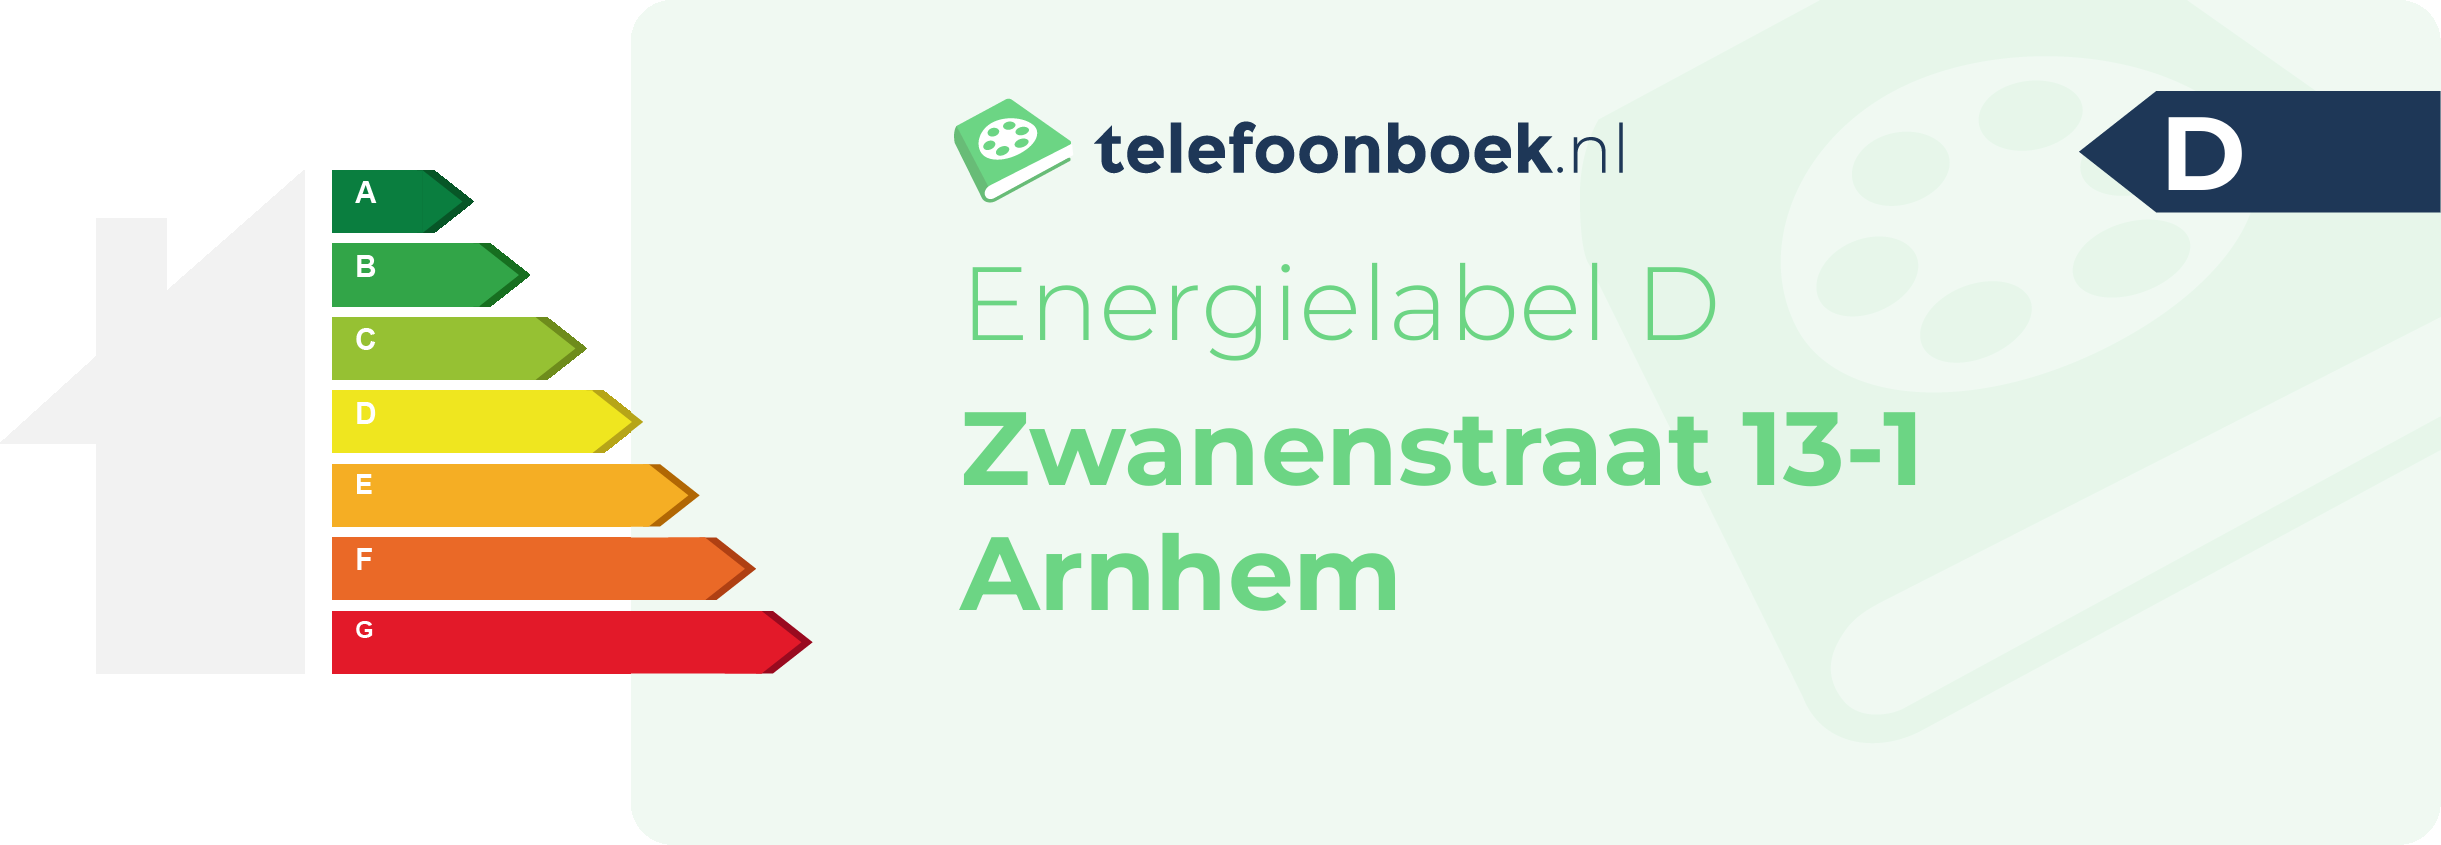 Energielabel Zwanenstraat 13-1 Arnhem